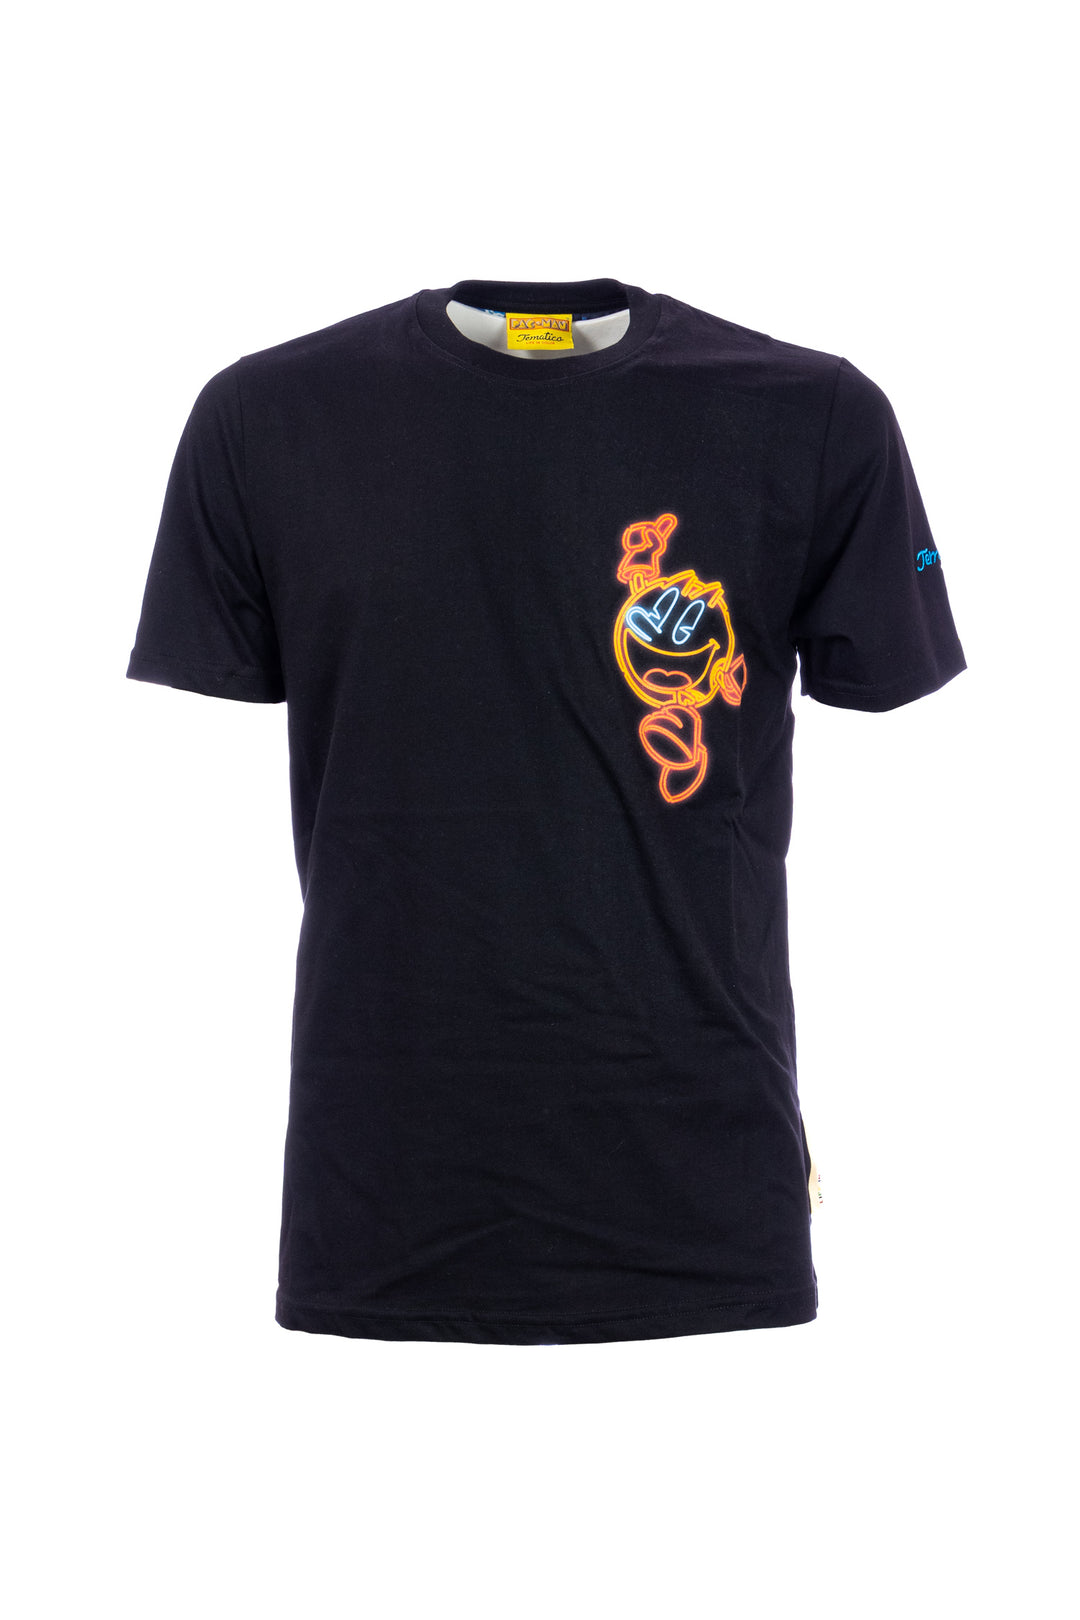 TEMATICO T-shirt nera in cotone con stampa neon Pac-Man - Mancinelli 1954